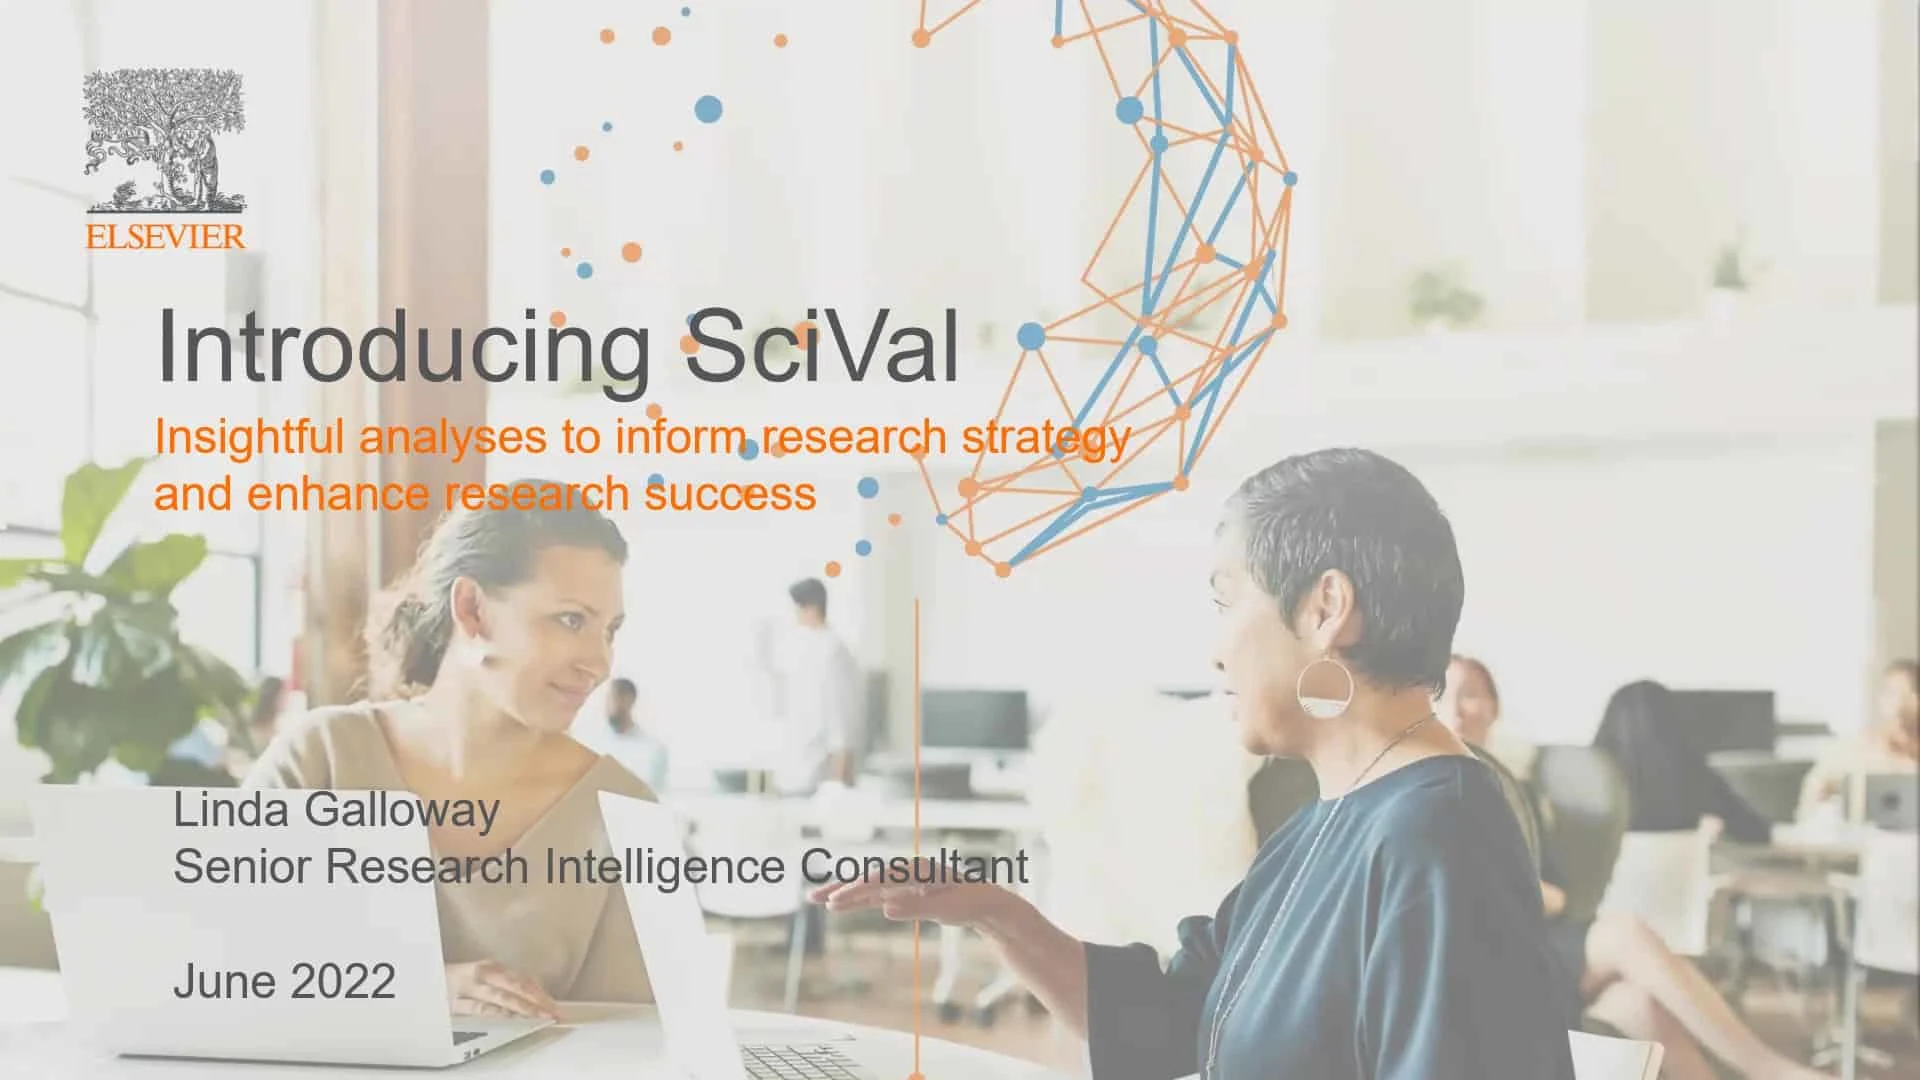 Video Introducing Scival